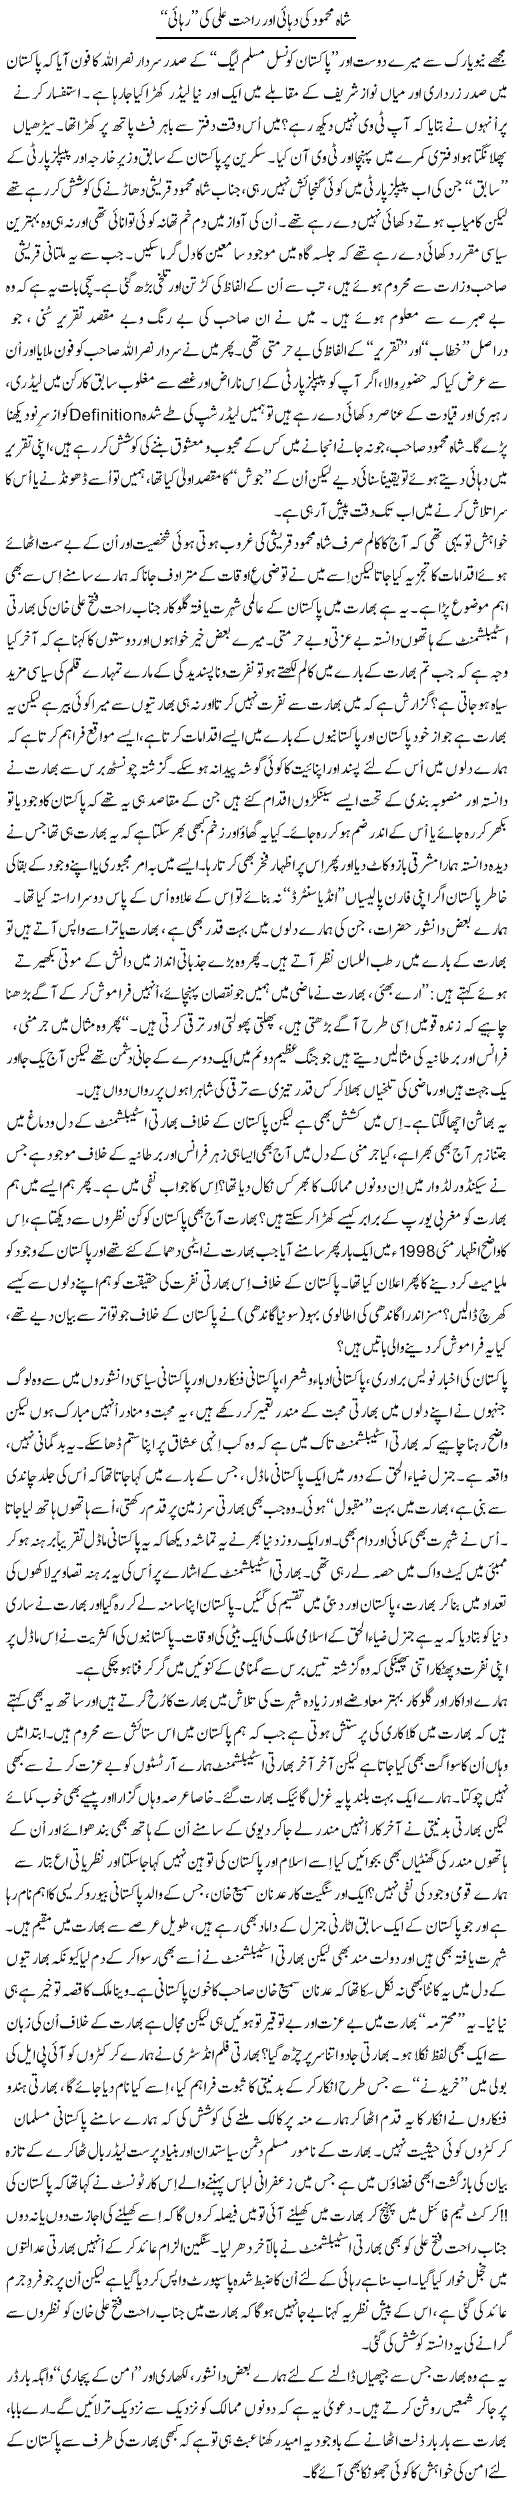 Shah Mehmood anf Rahat Ali Express Column Tanvir Qasir 21 February 2011